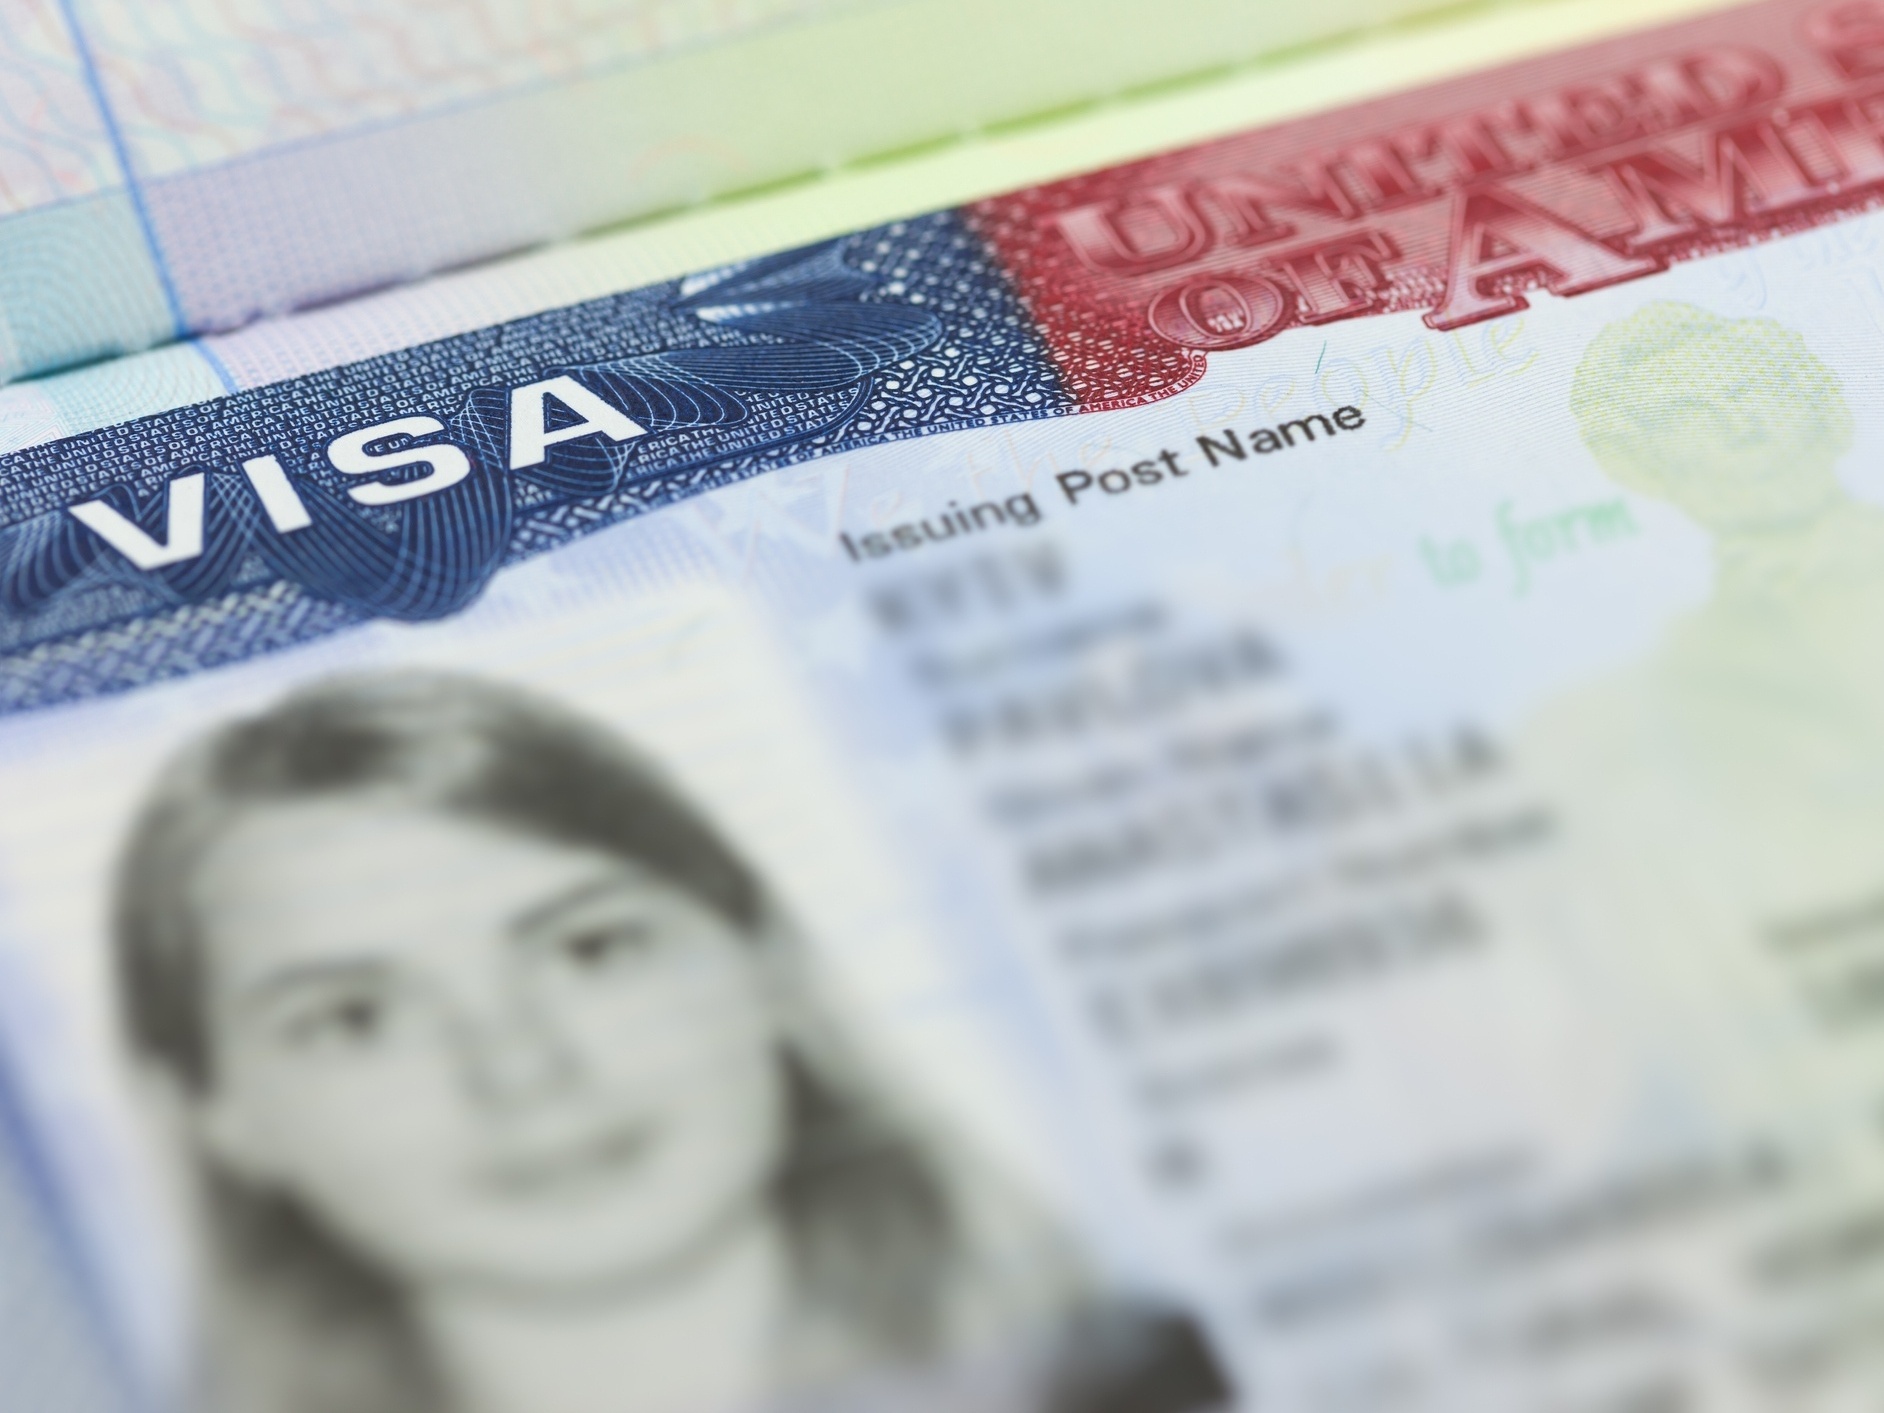 Visto Americano: entenda os diferentes vistos existentes